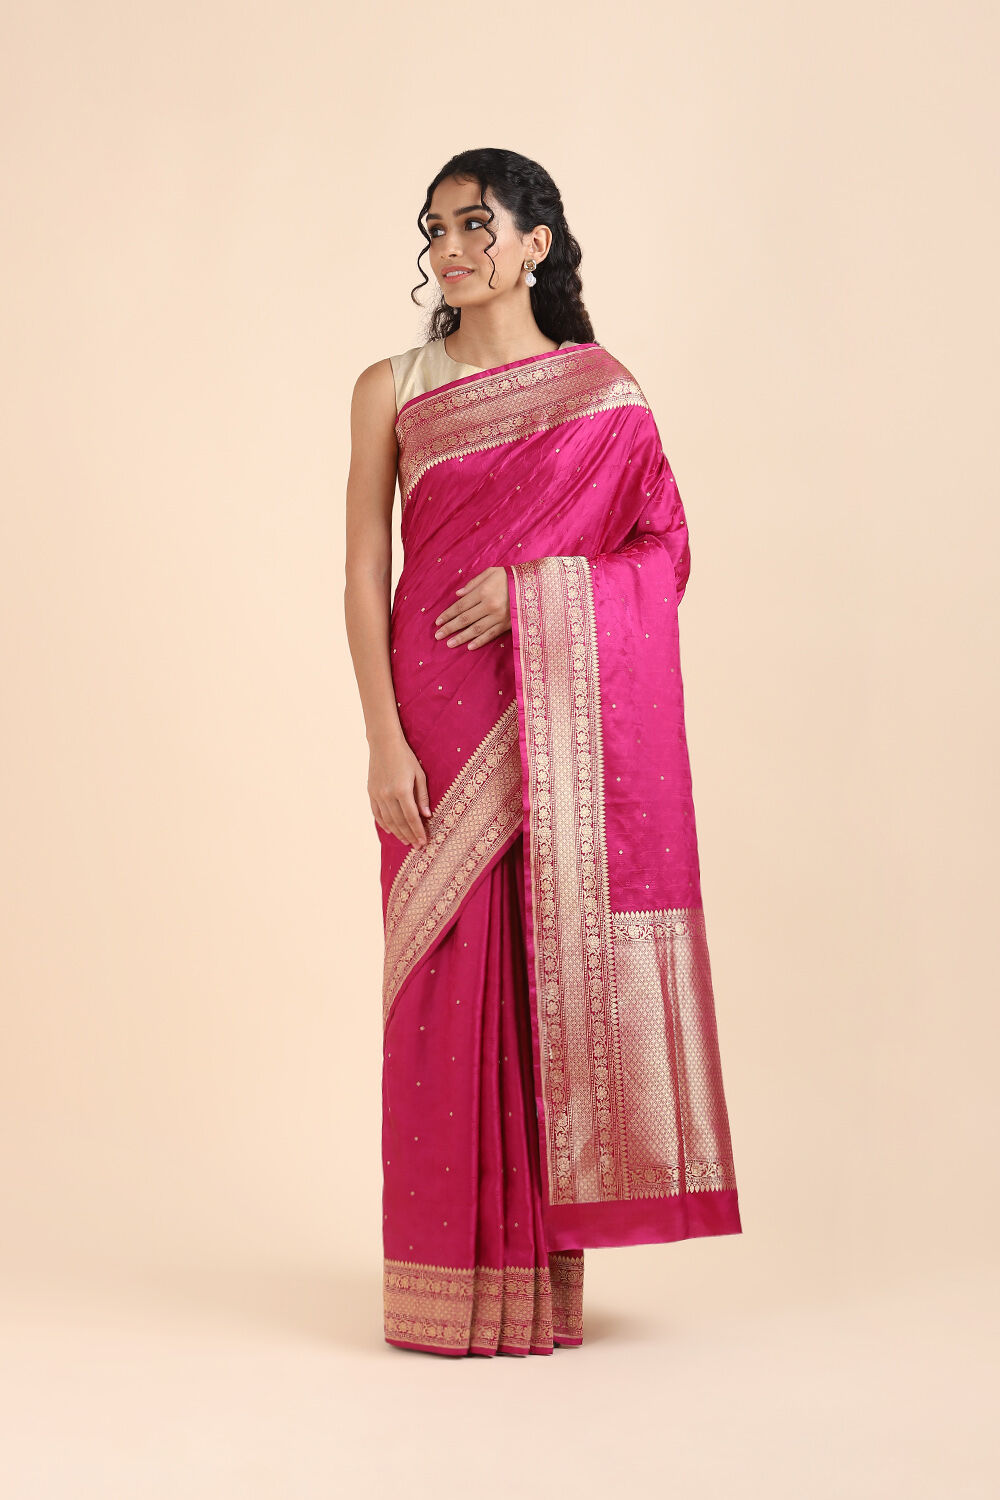 Anx 257 By Sagar Impex Banarasi Silk Festive Wear Saree Collection Sagar  Impex Wholesale Sarees Catalog